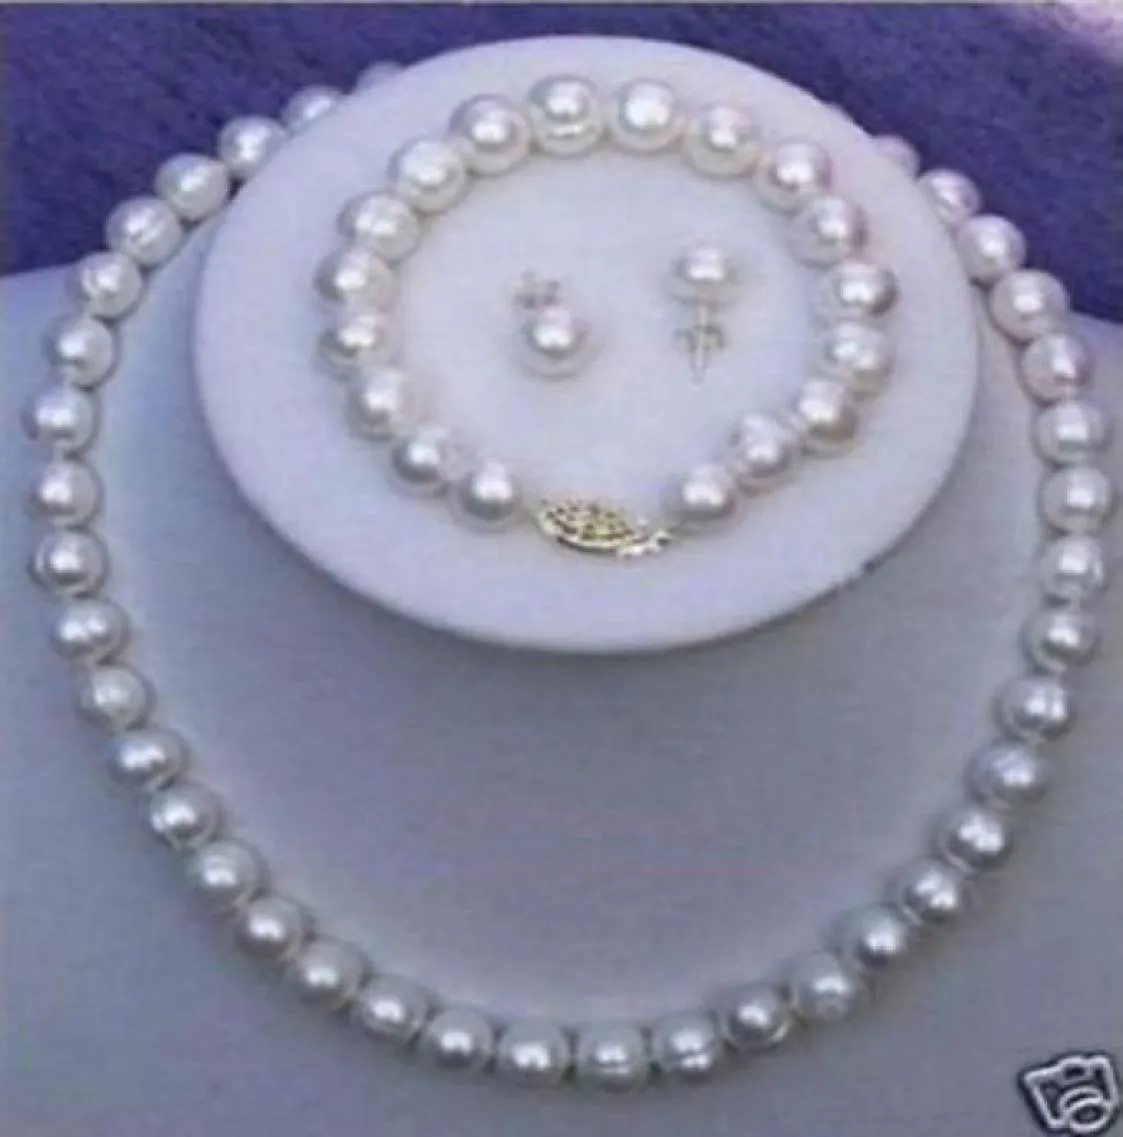 89mm White Cultured Freshwater Pearl Necklace Bracelet Earring Set5131840